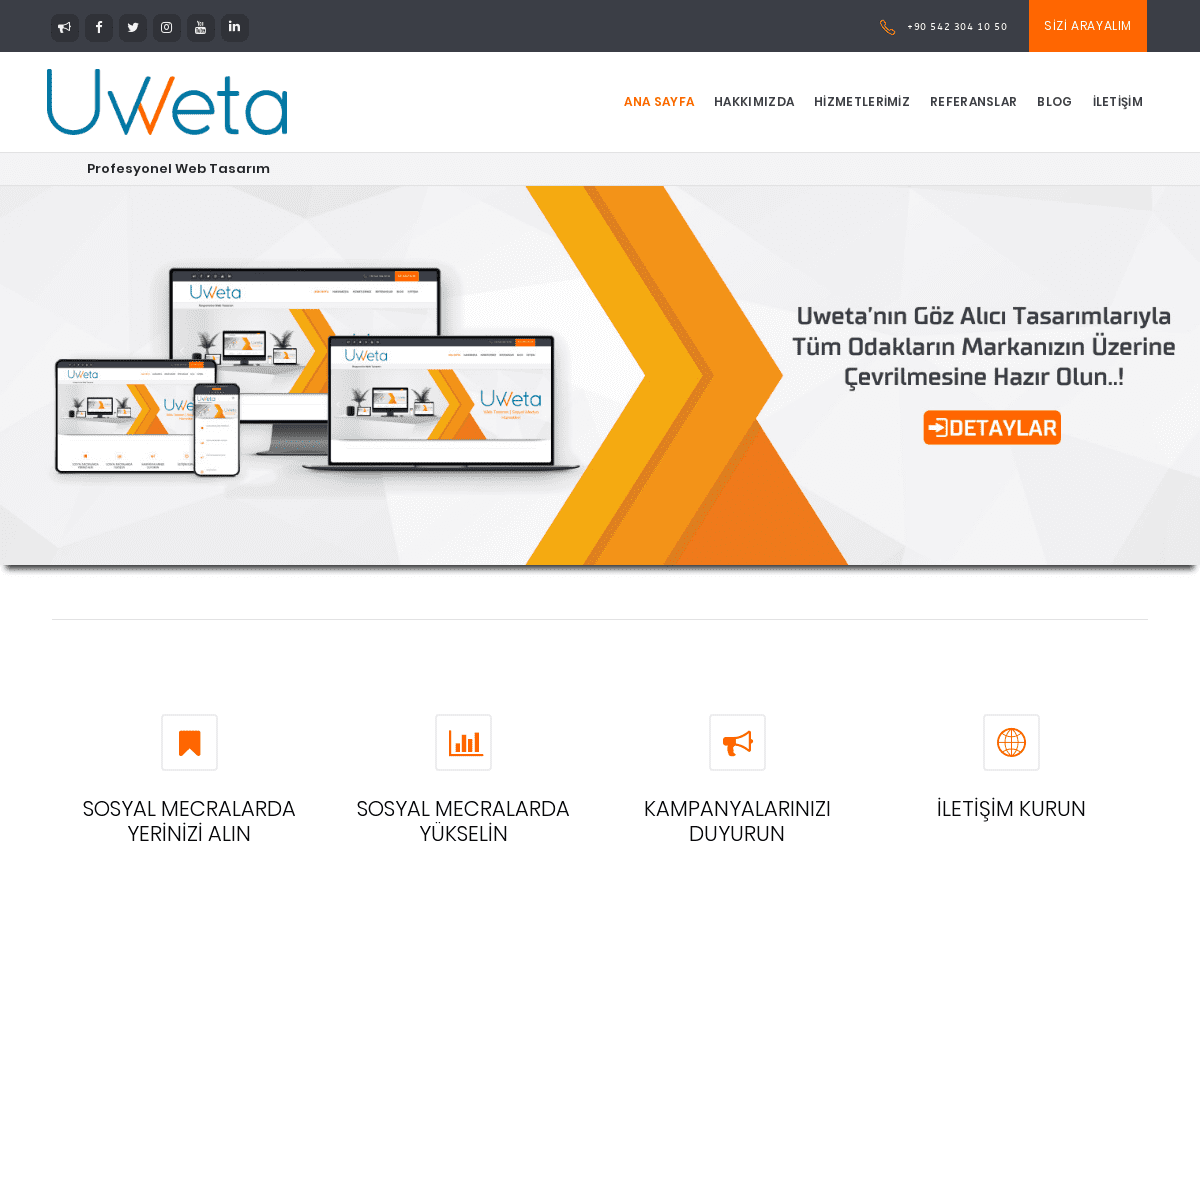 A complete backup of uweta.com